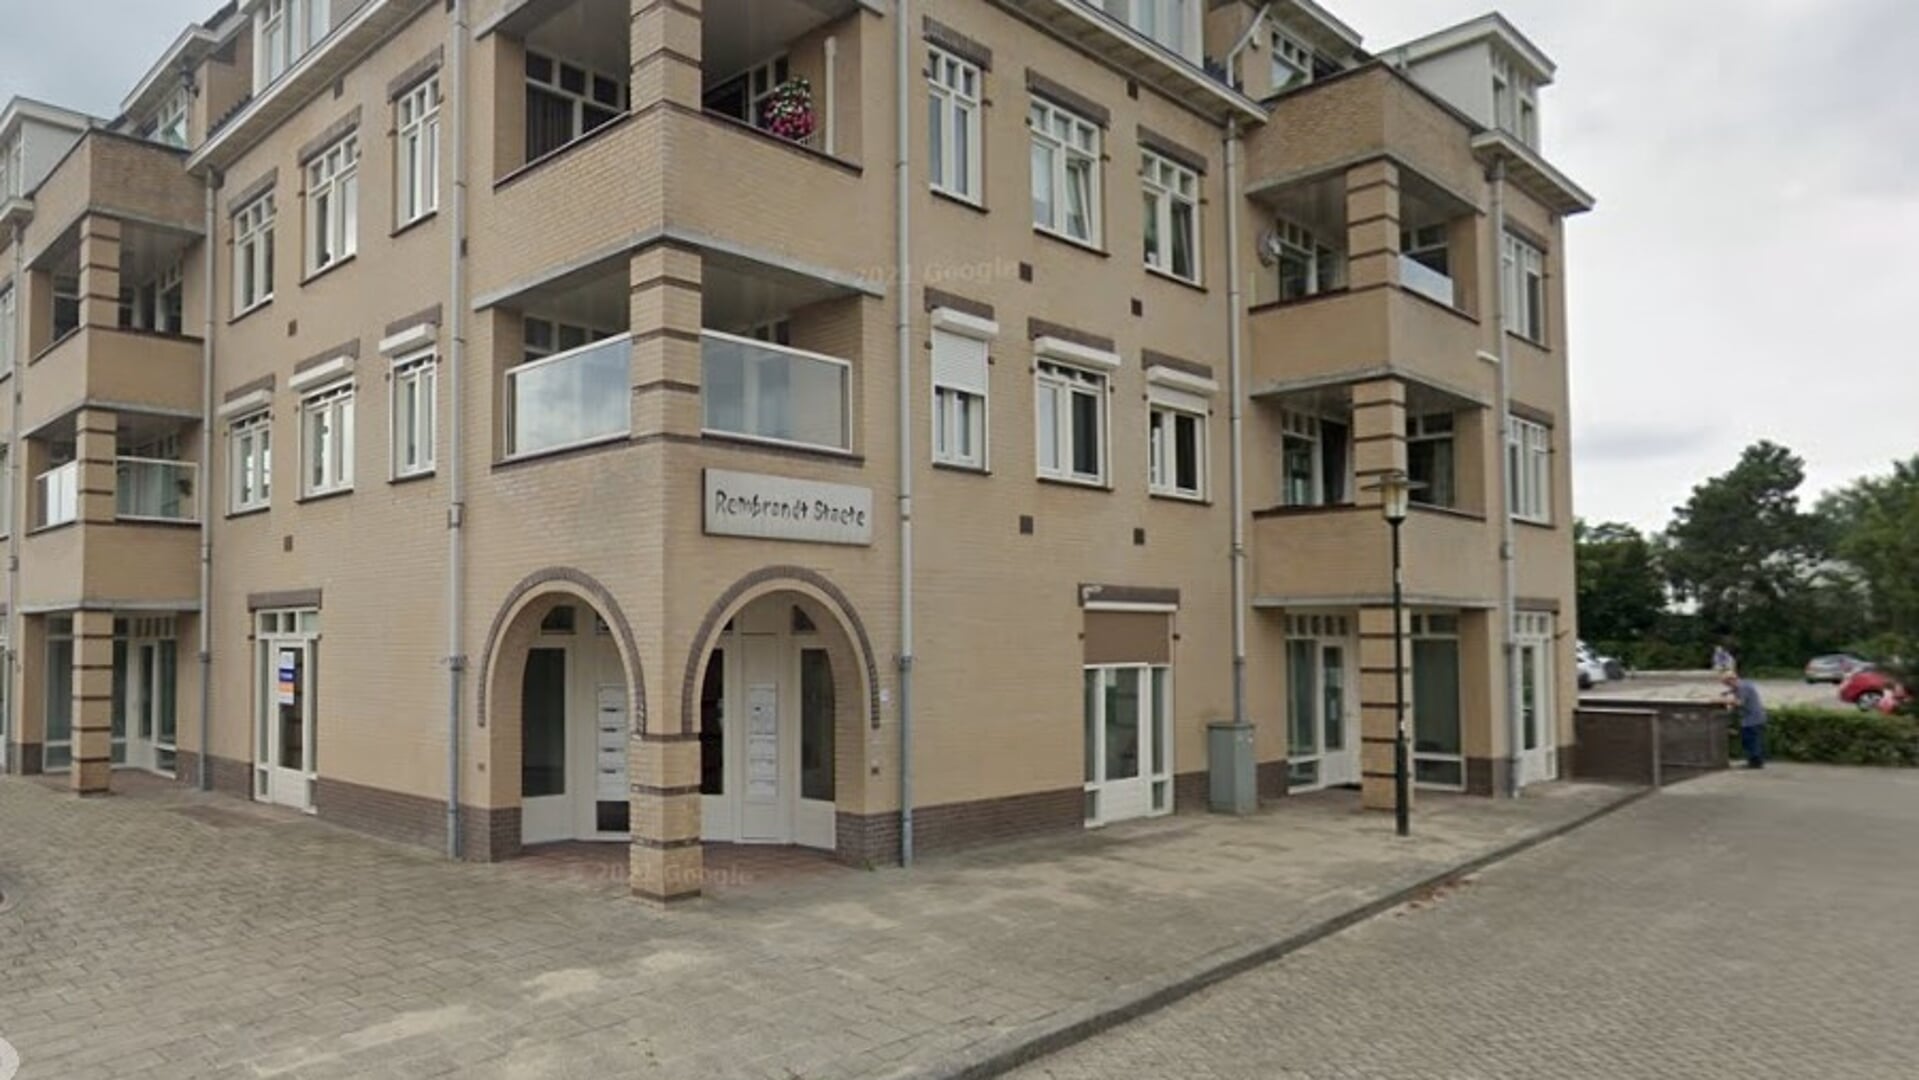 Topcoach is sinds 1 maart gevestigd in Rembrandt Staete